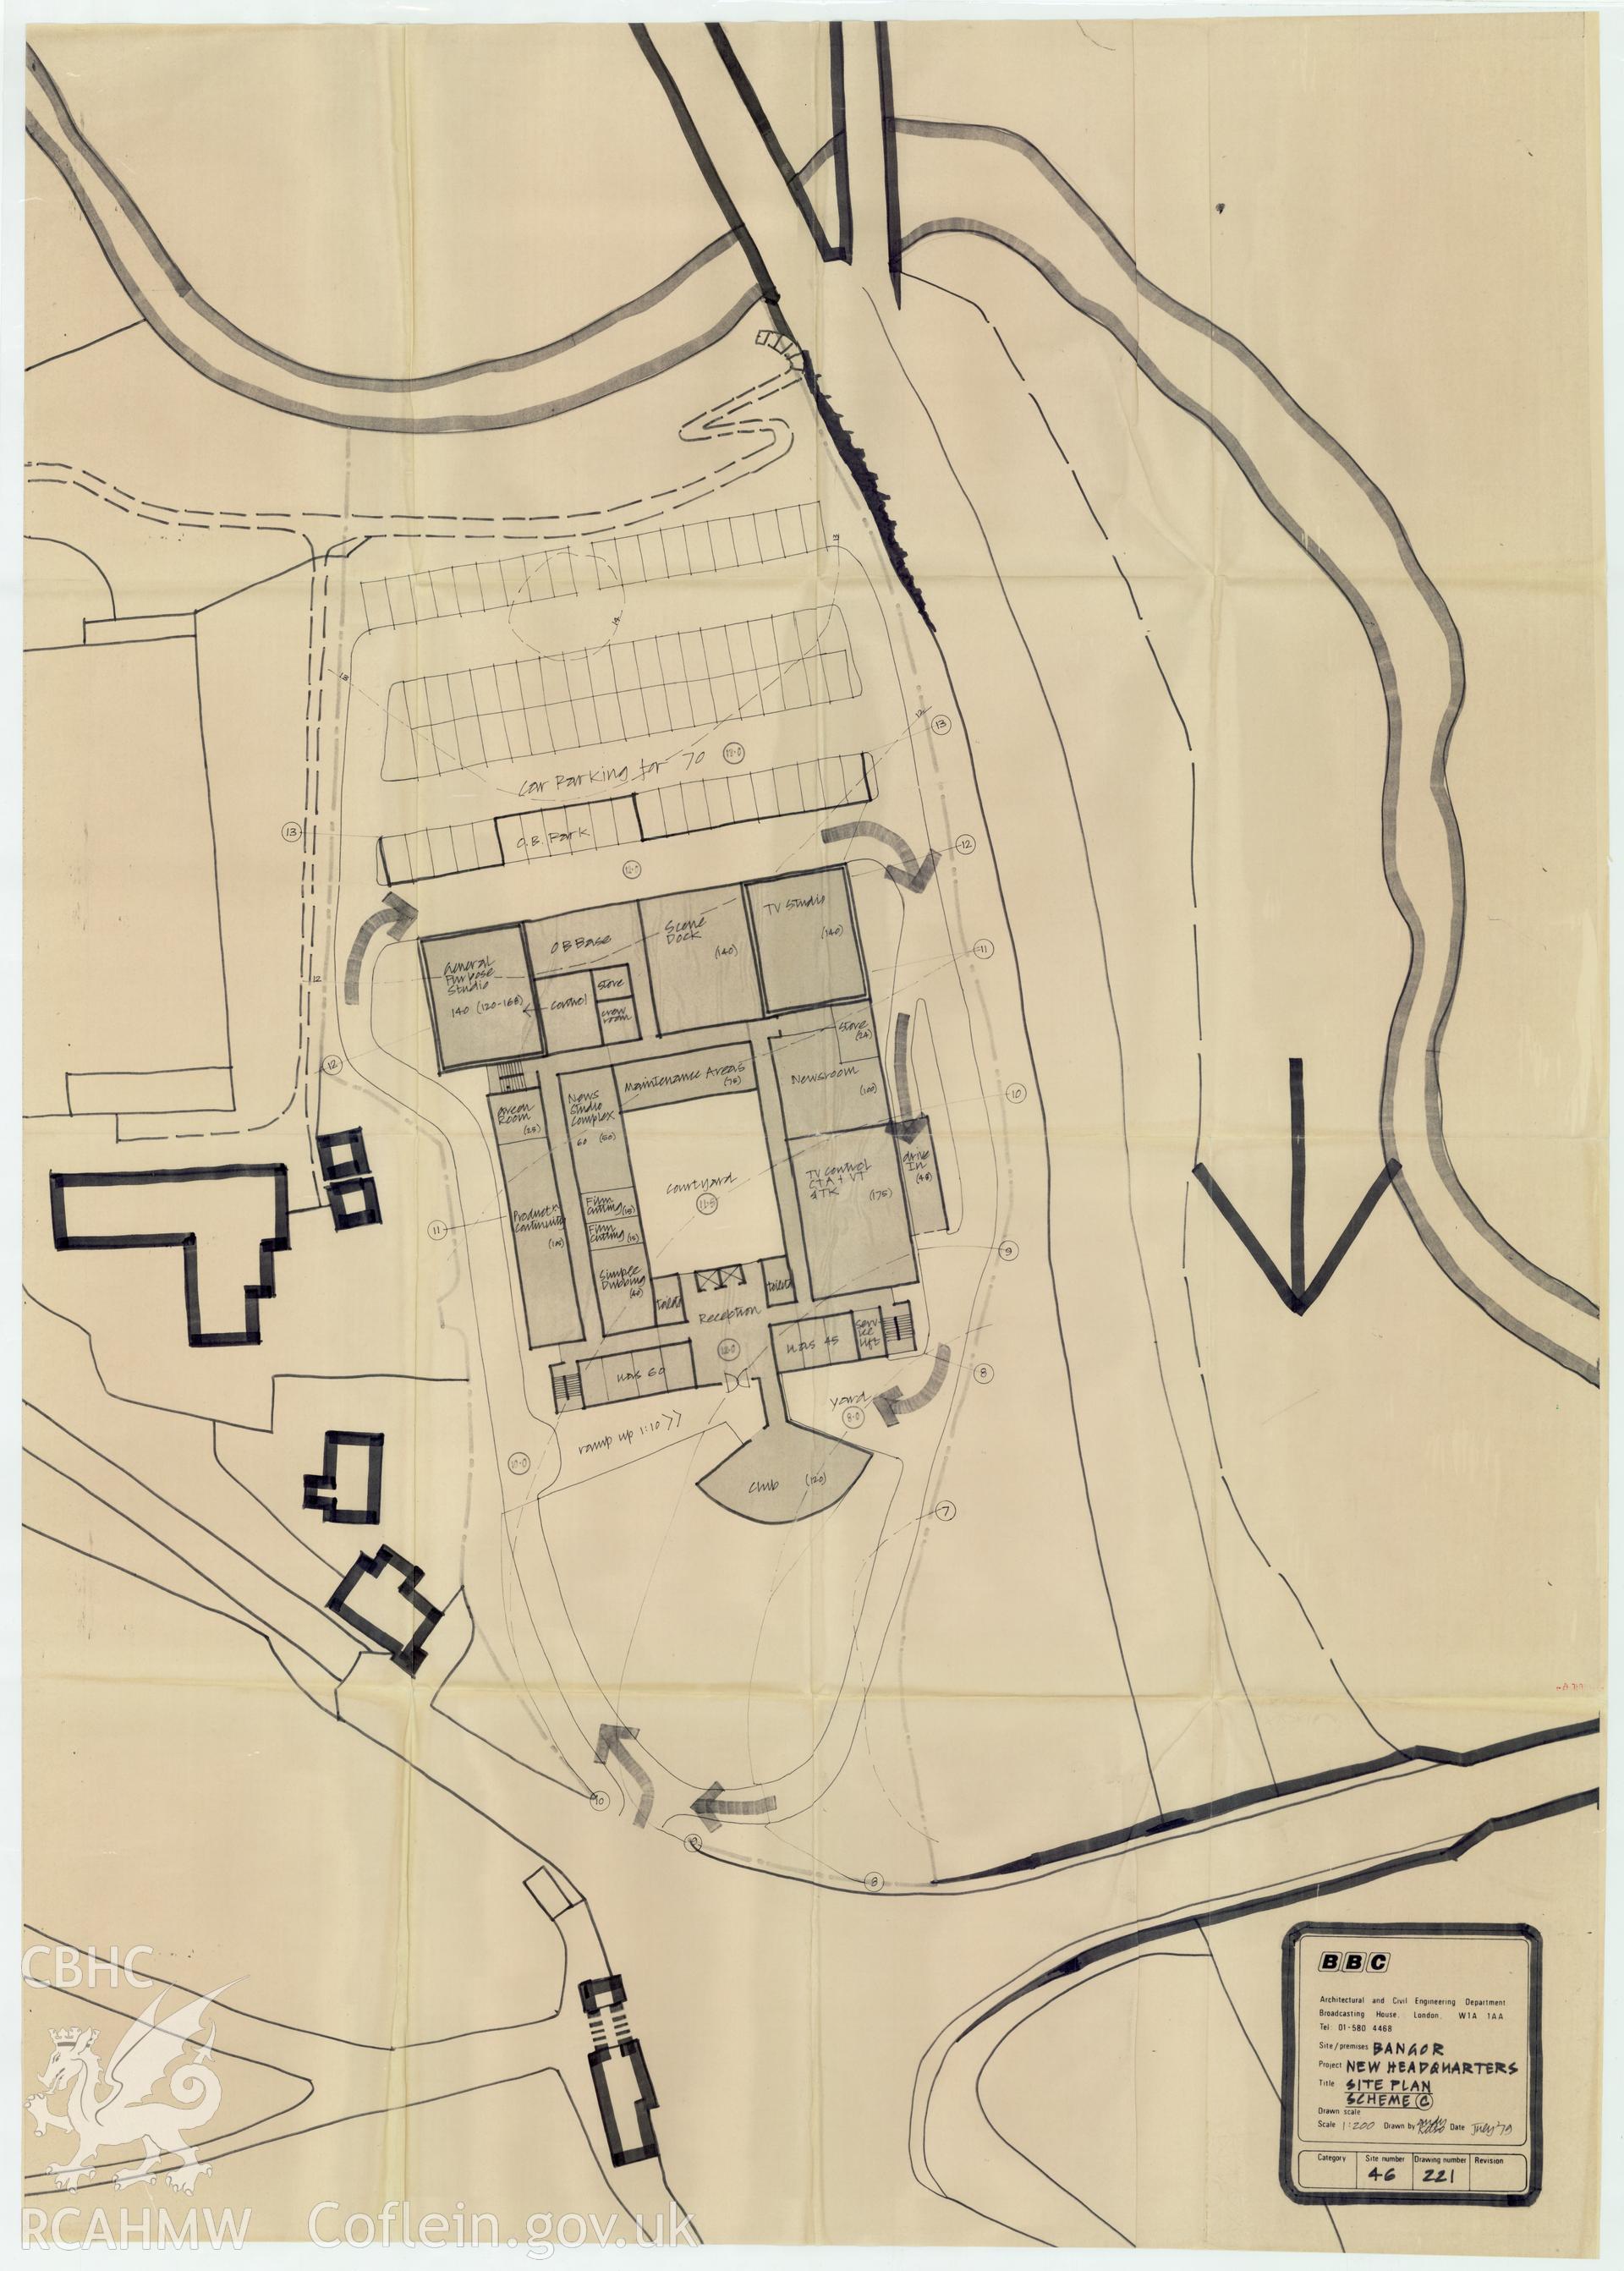 BBC premises, Bangor - New HQ Development Scheme C - site plan. Drawing No. 46/221, July 1979.